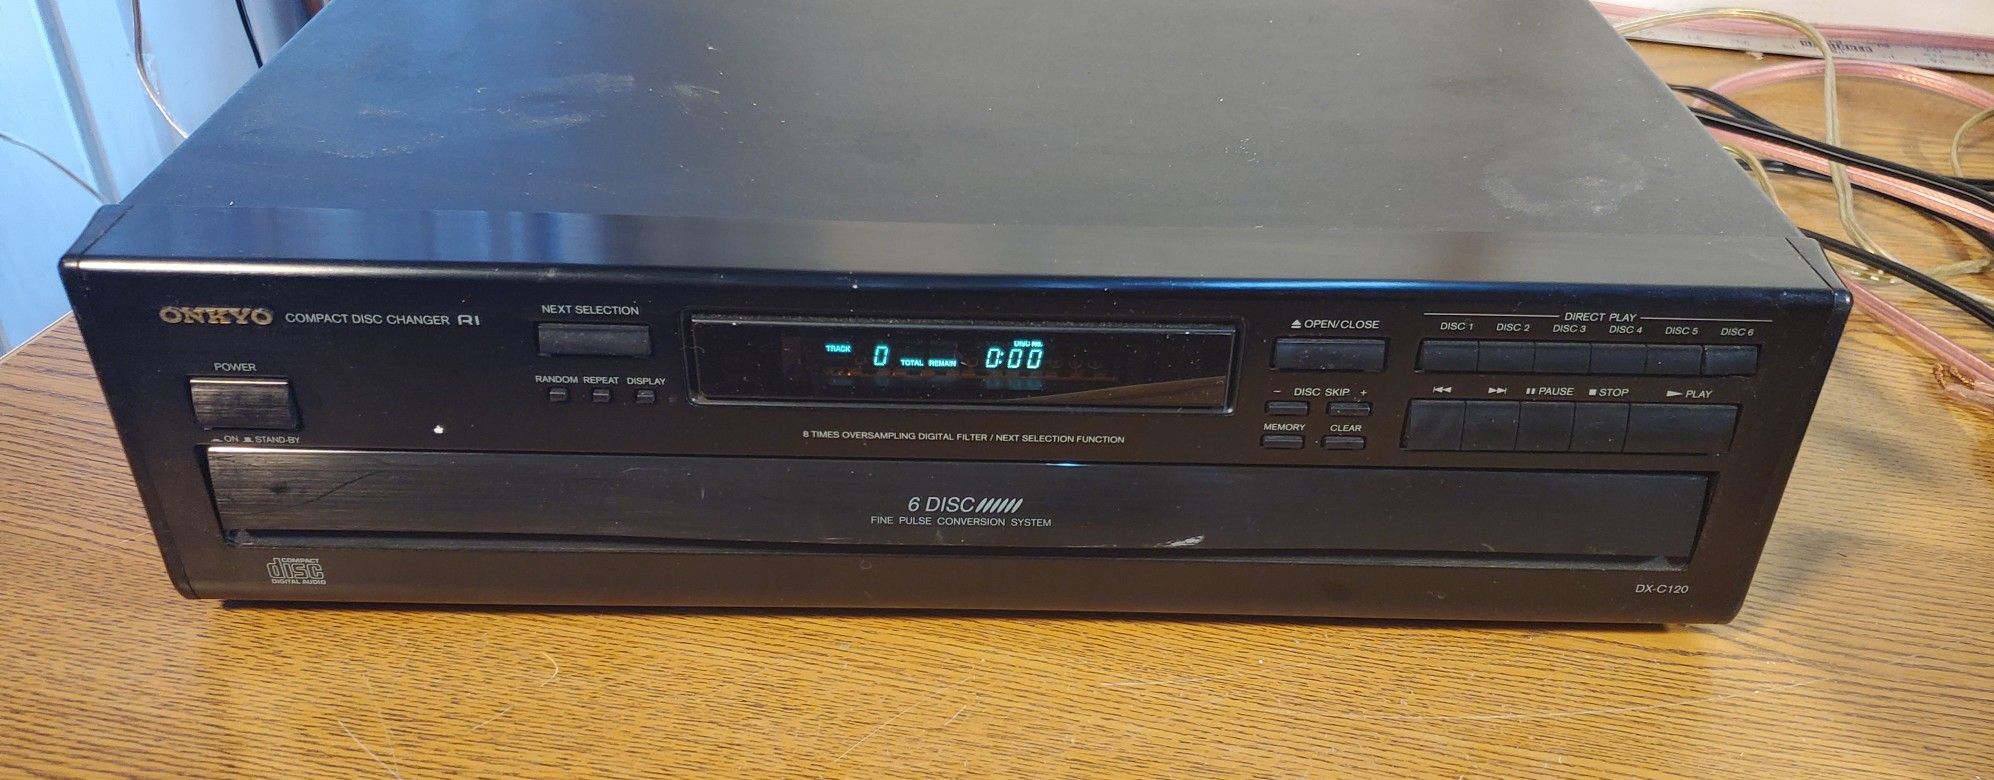 Onkyo DX-C120 6 Disc Changer CD Player Watch Video Demo